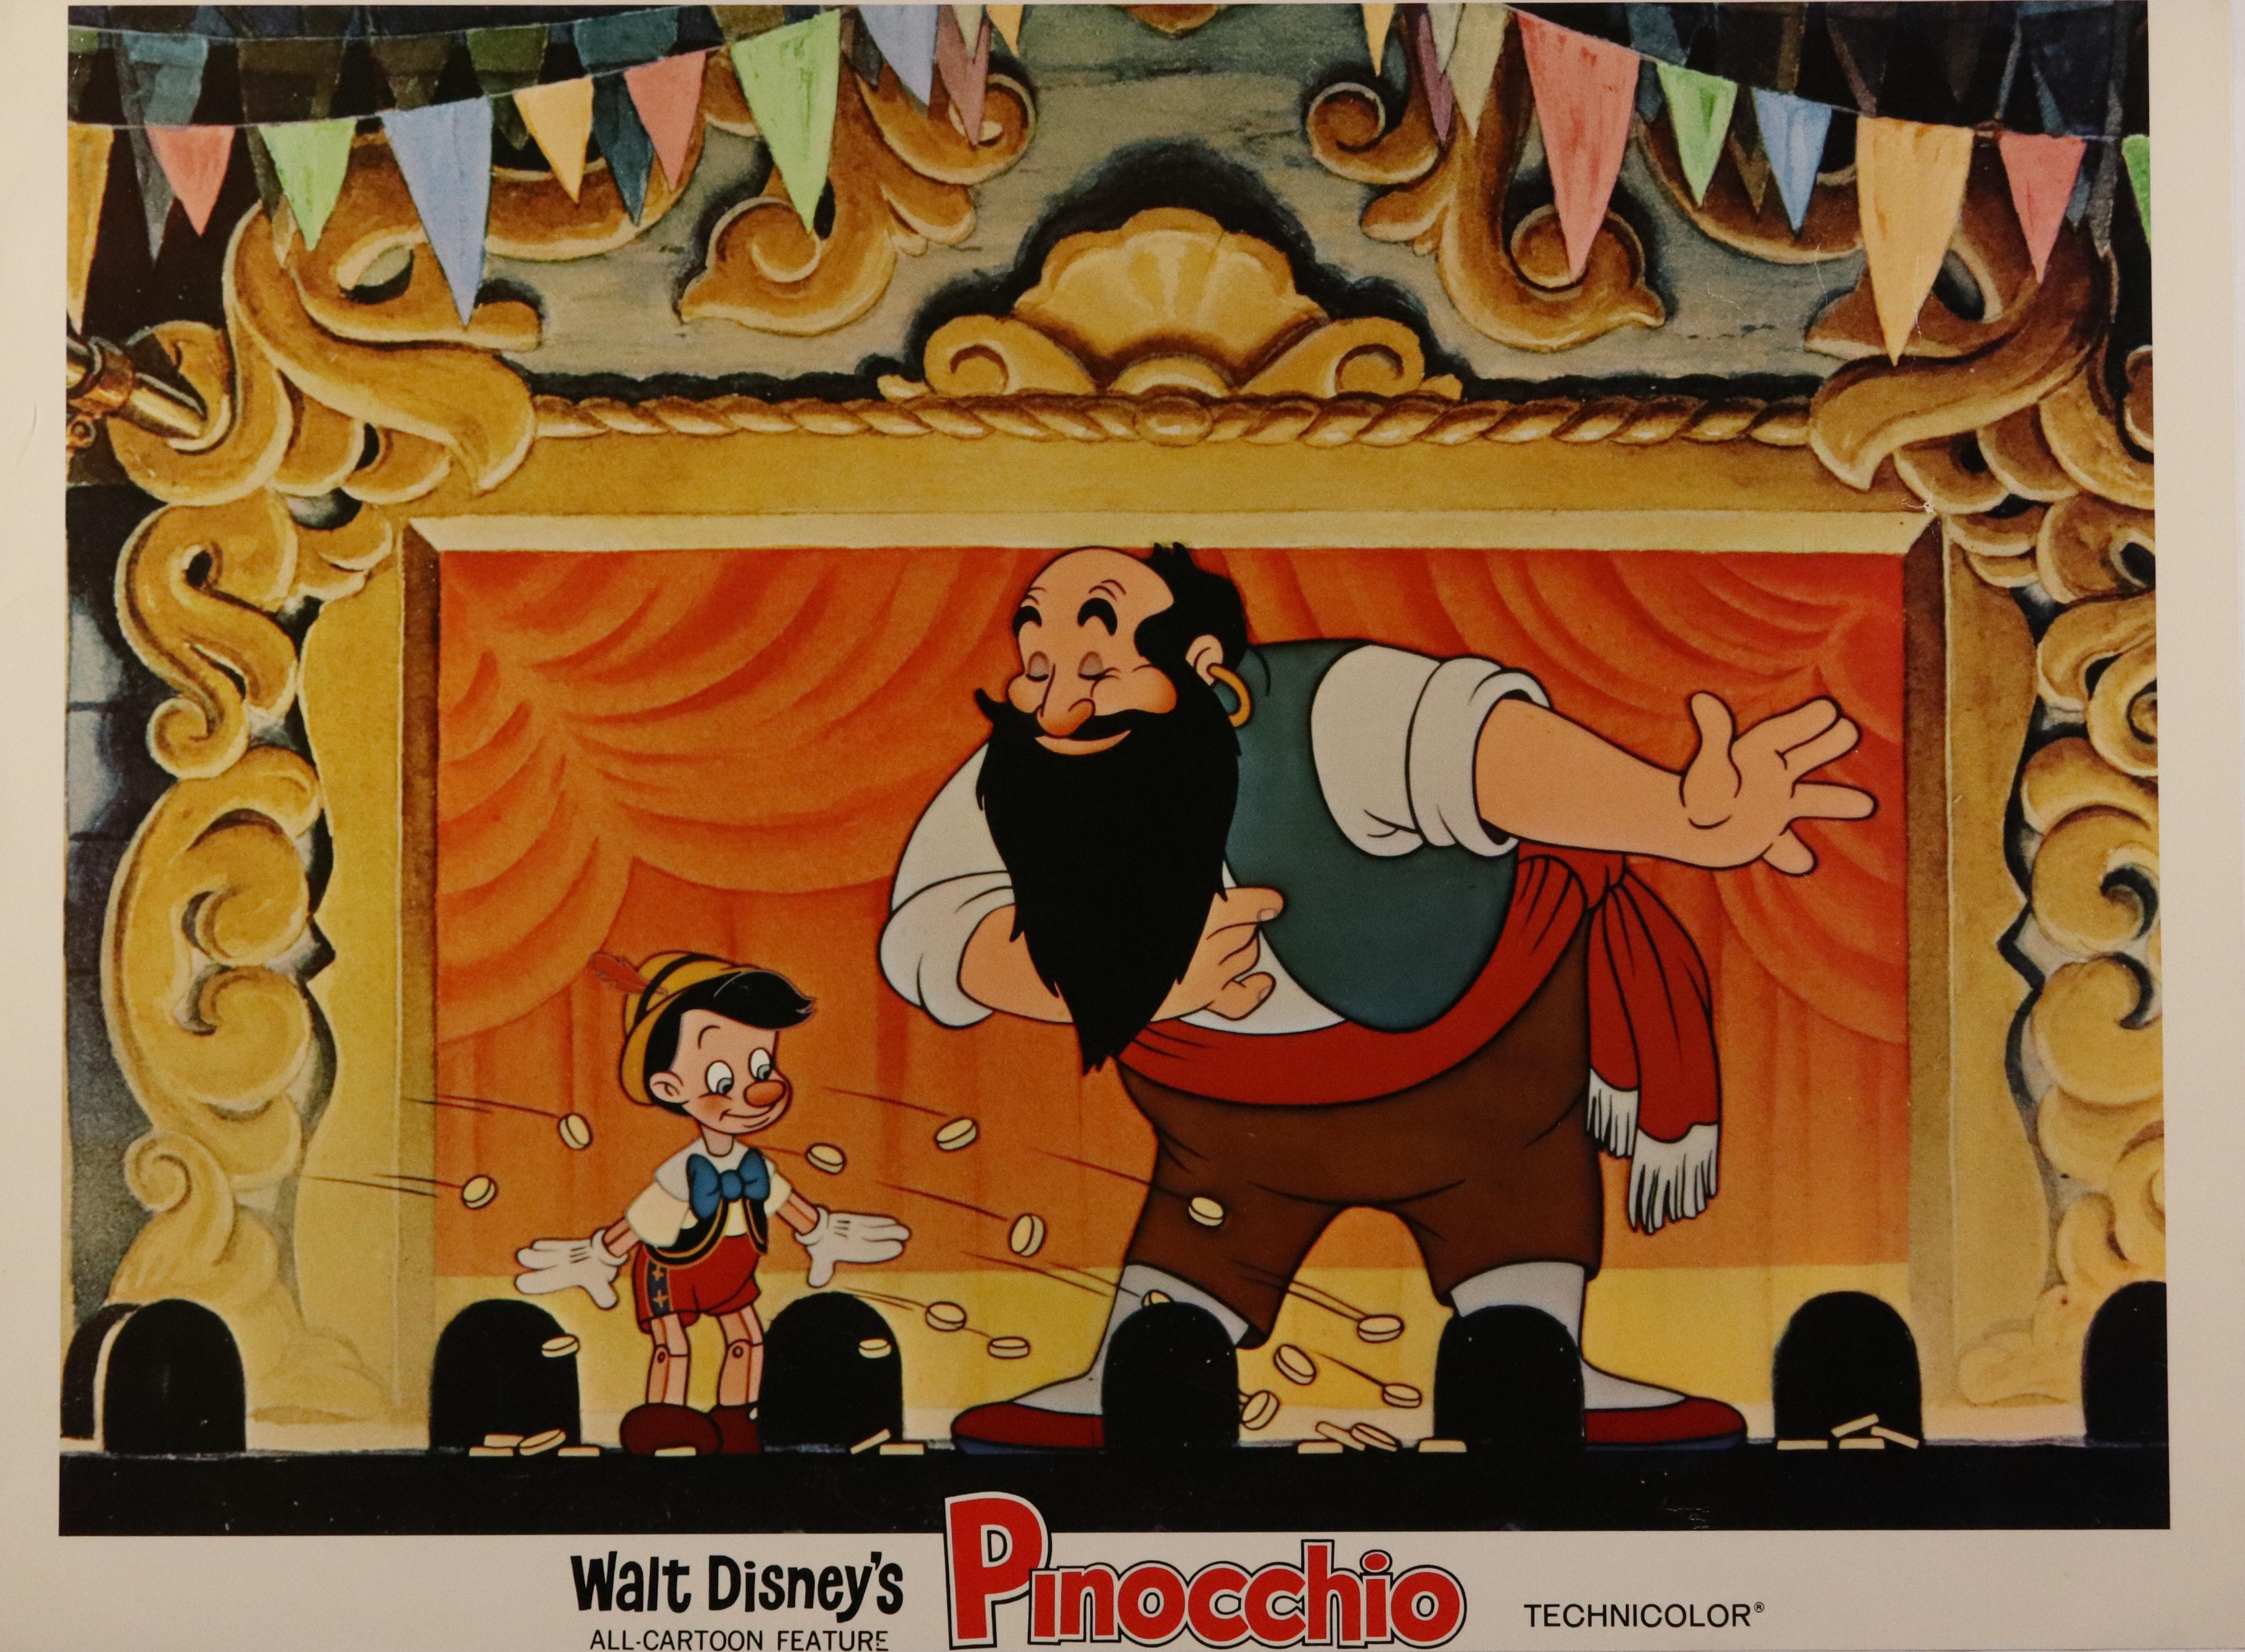 Unknown Interior Print - "Walt Disney's Pinocchio" Lobby Card, USA 1940